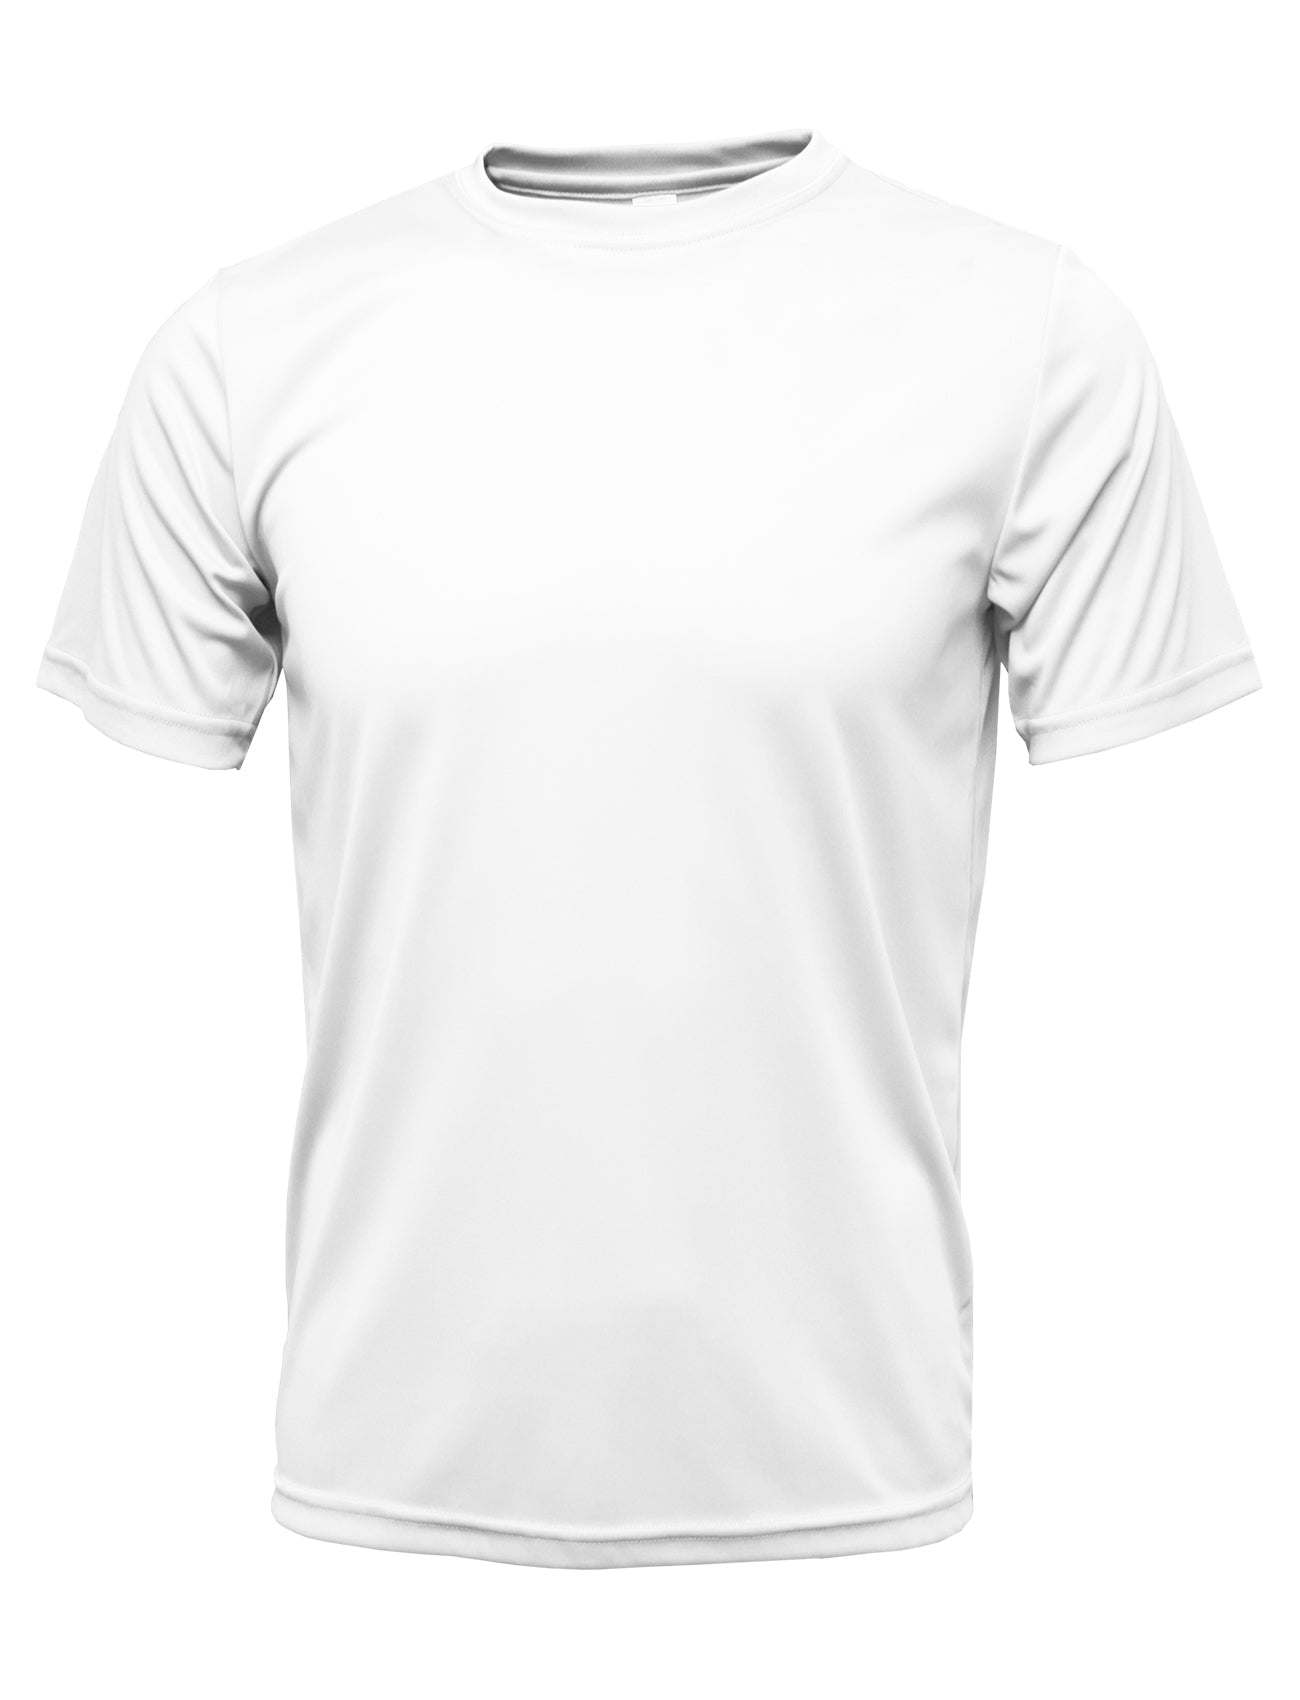 Astro Dome Houston Astros World Series 2022 Short Sleeved Shirt